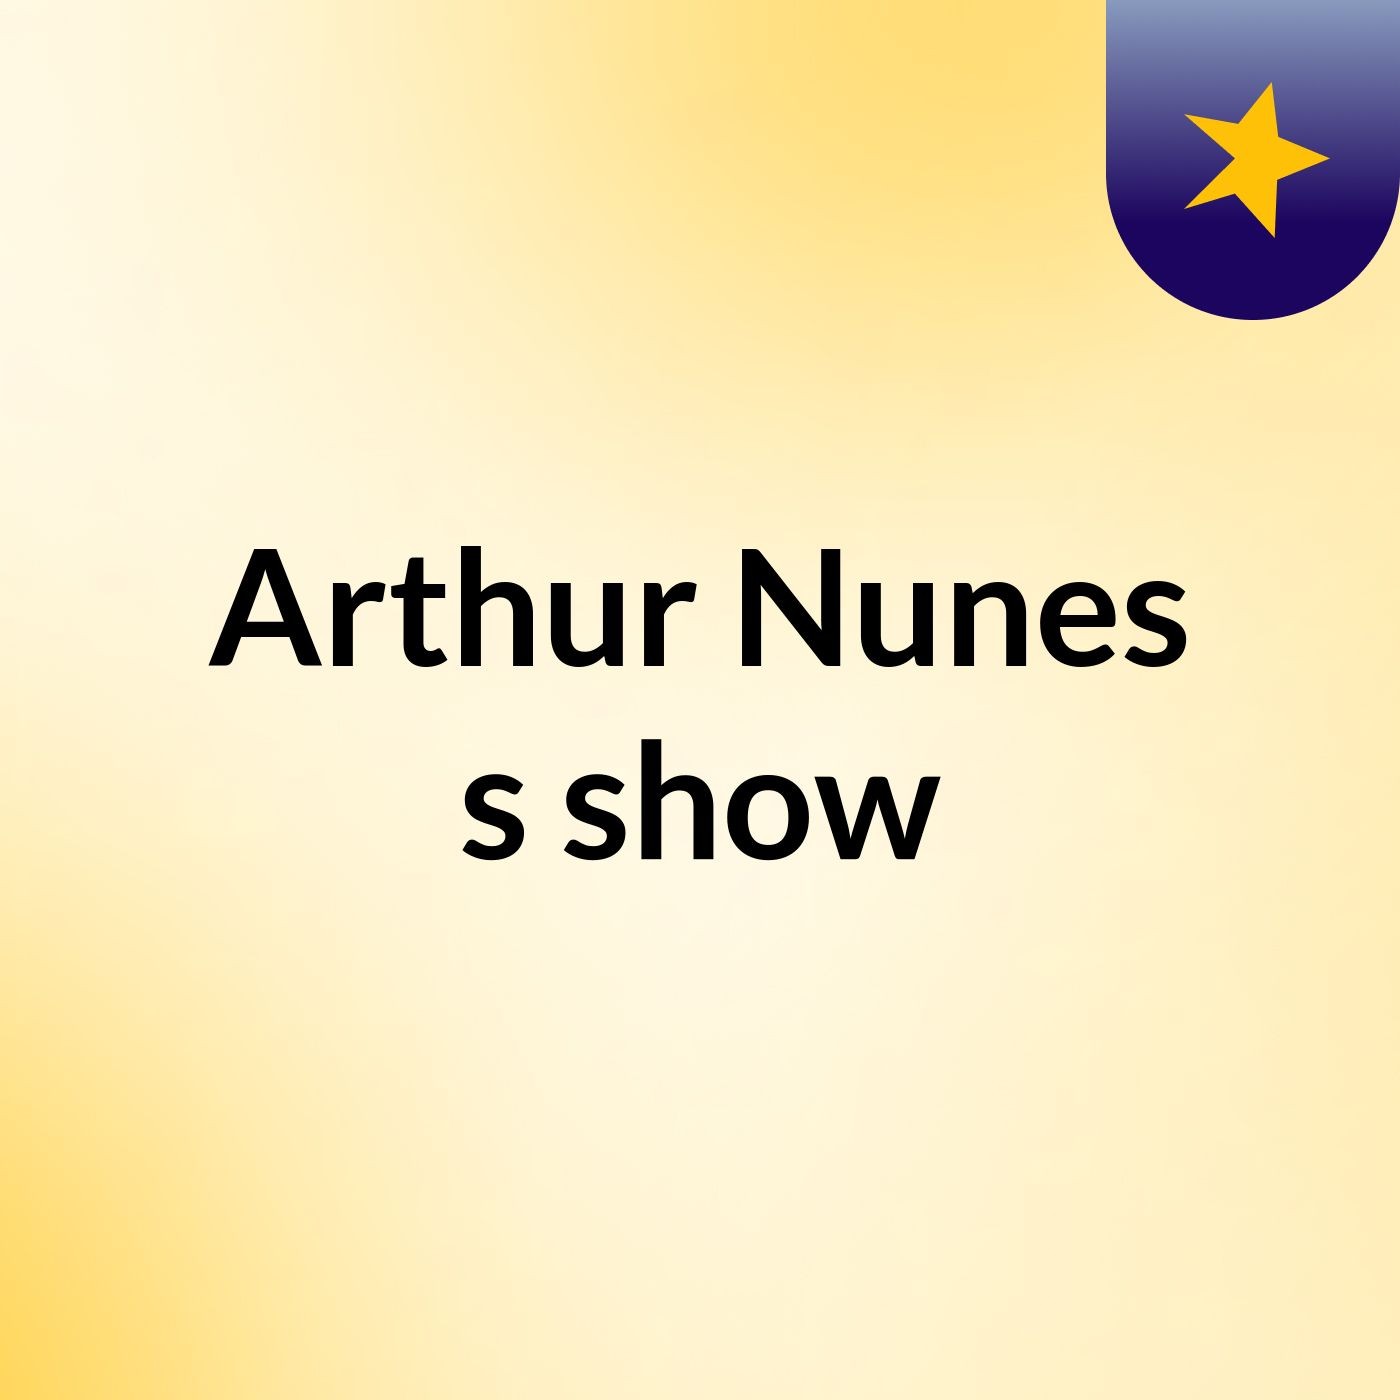 Arthur Nunes's show